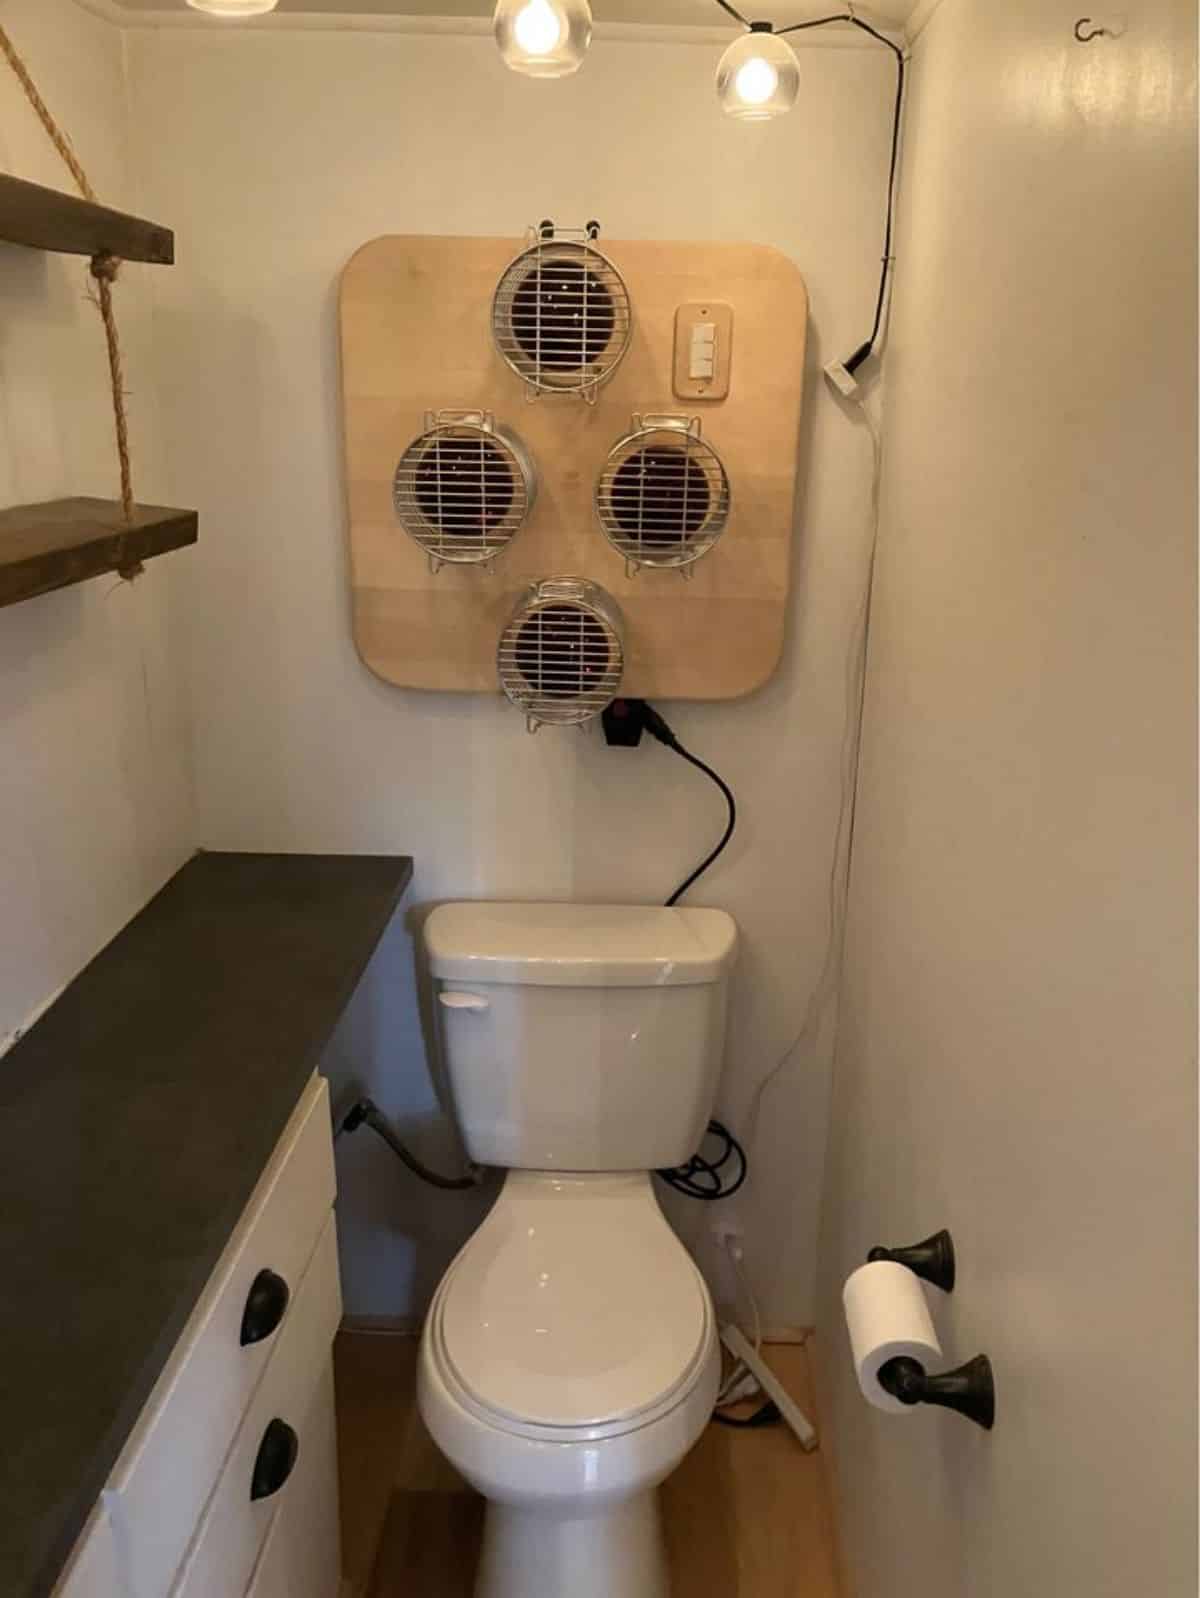 standard toilet in bathroom